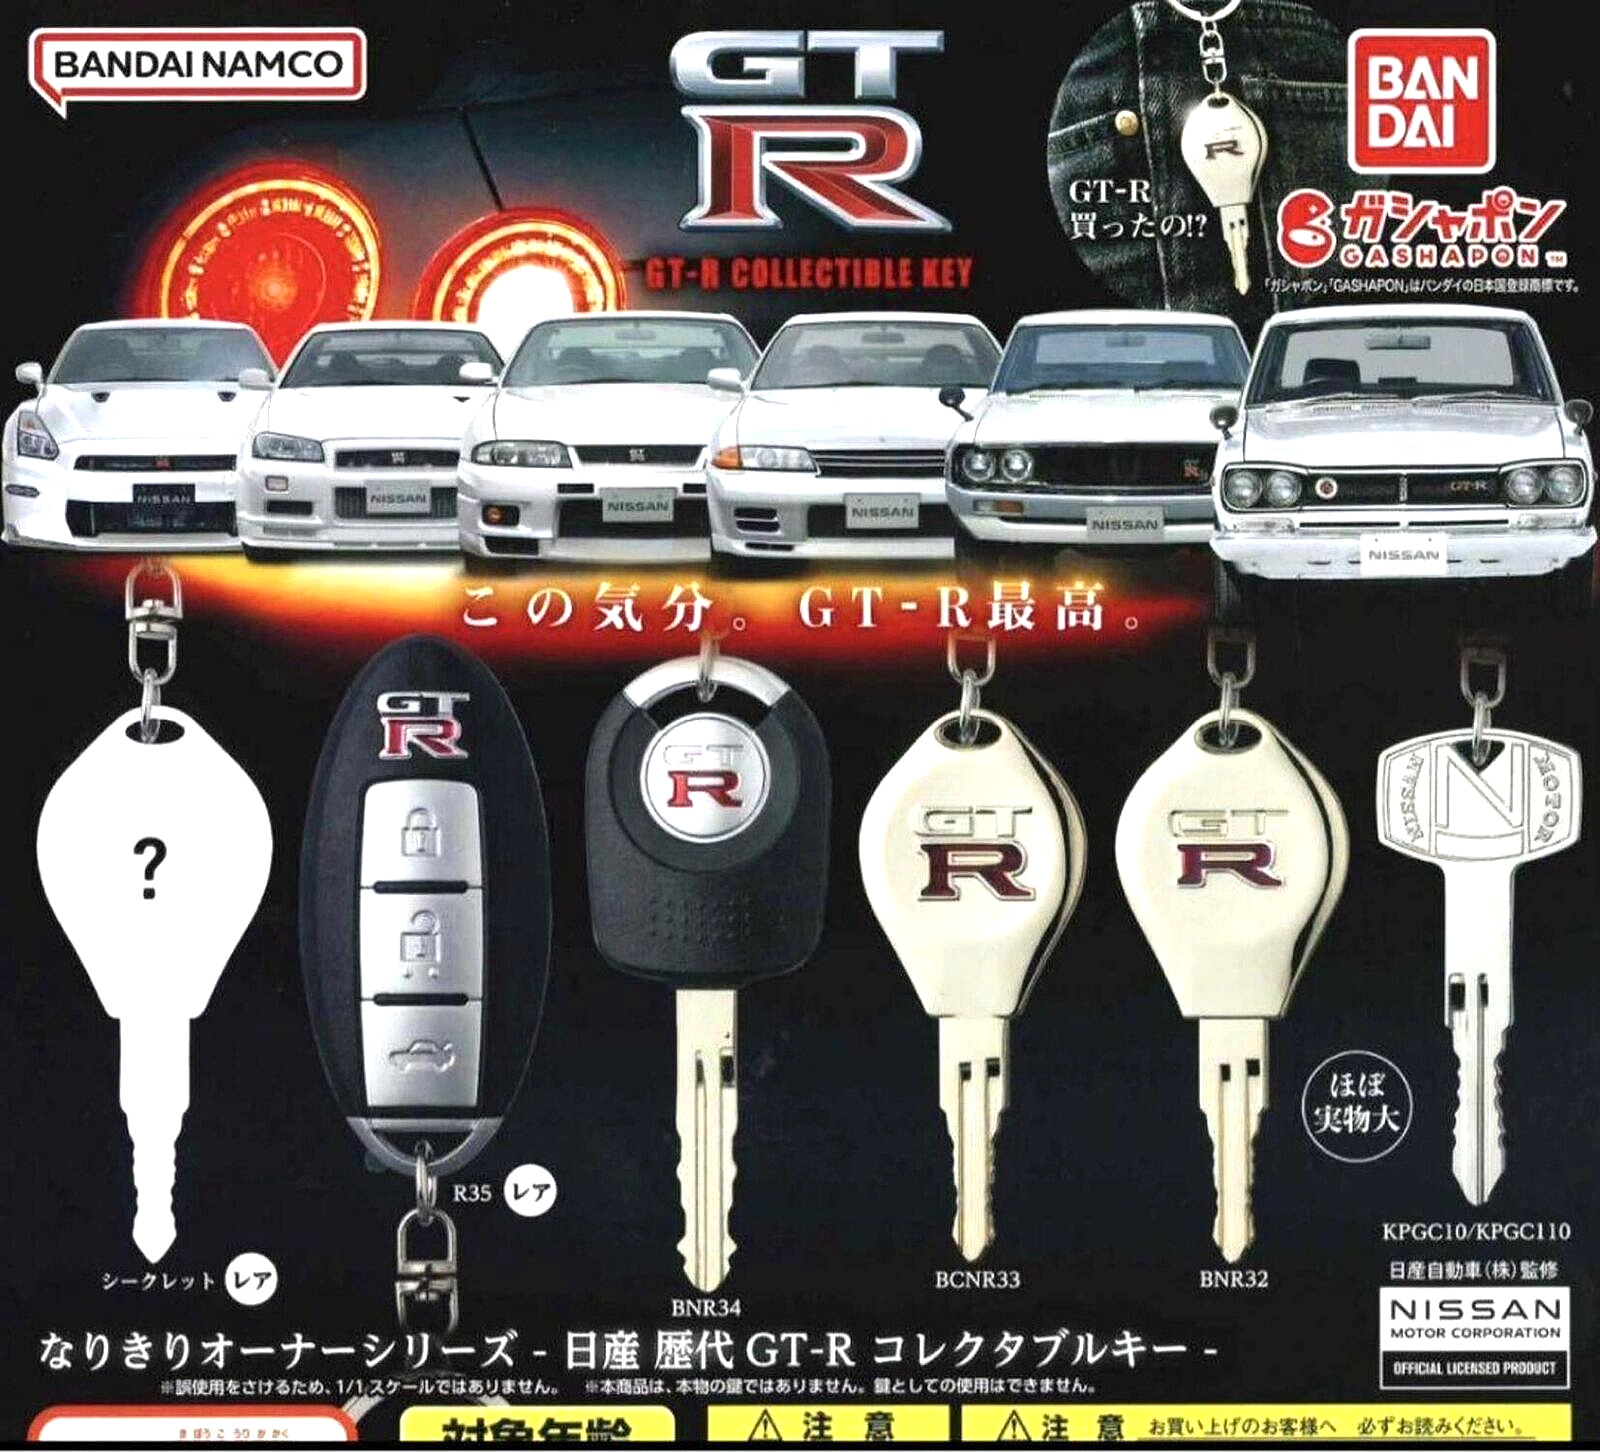 Nissan Successive GT-R Collectable Key set of 6PCS Bandai Gashapon capsule toy